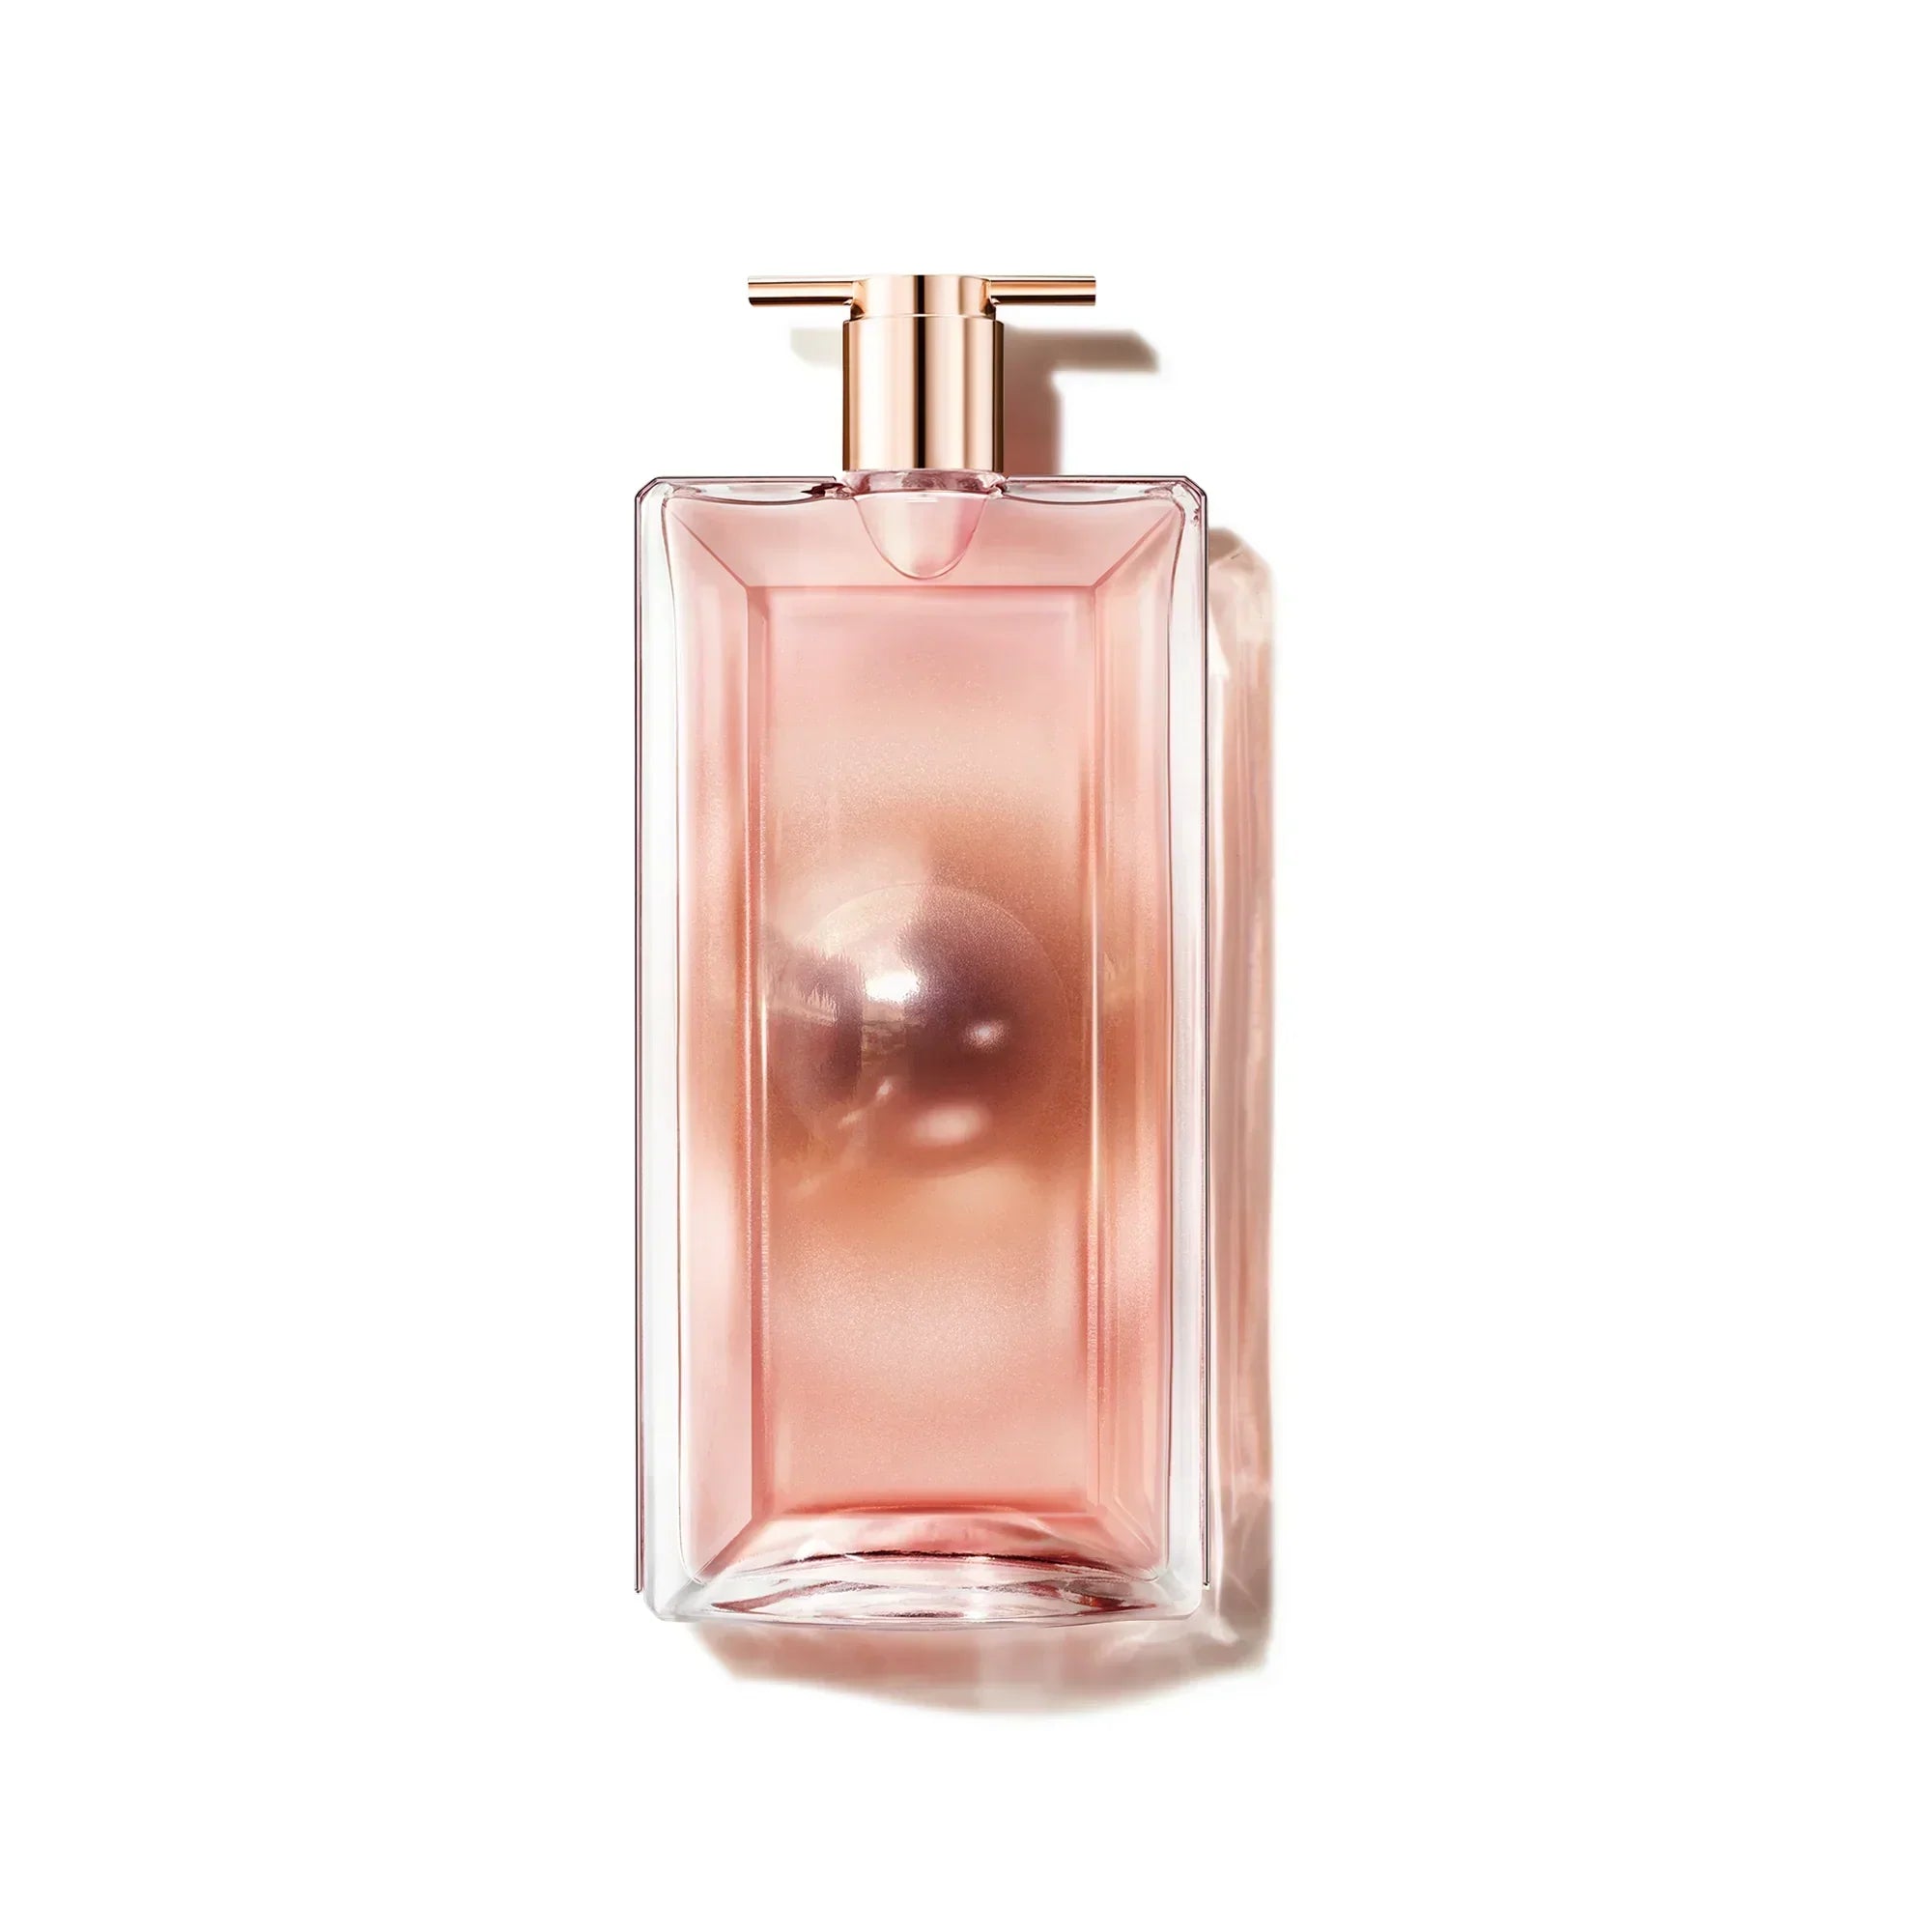 3 Parfums Dolce Gabbana Devotion, My Way Giorgio Armani, Lâncome Idôle (Eau Parfum)